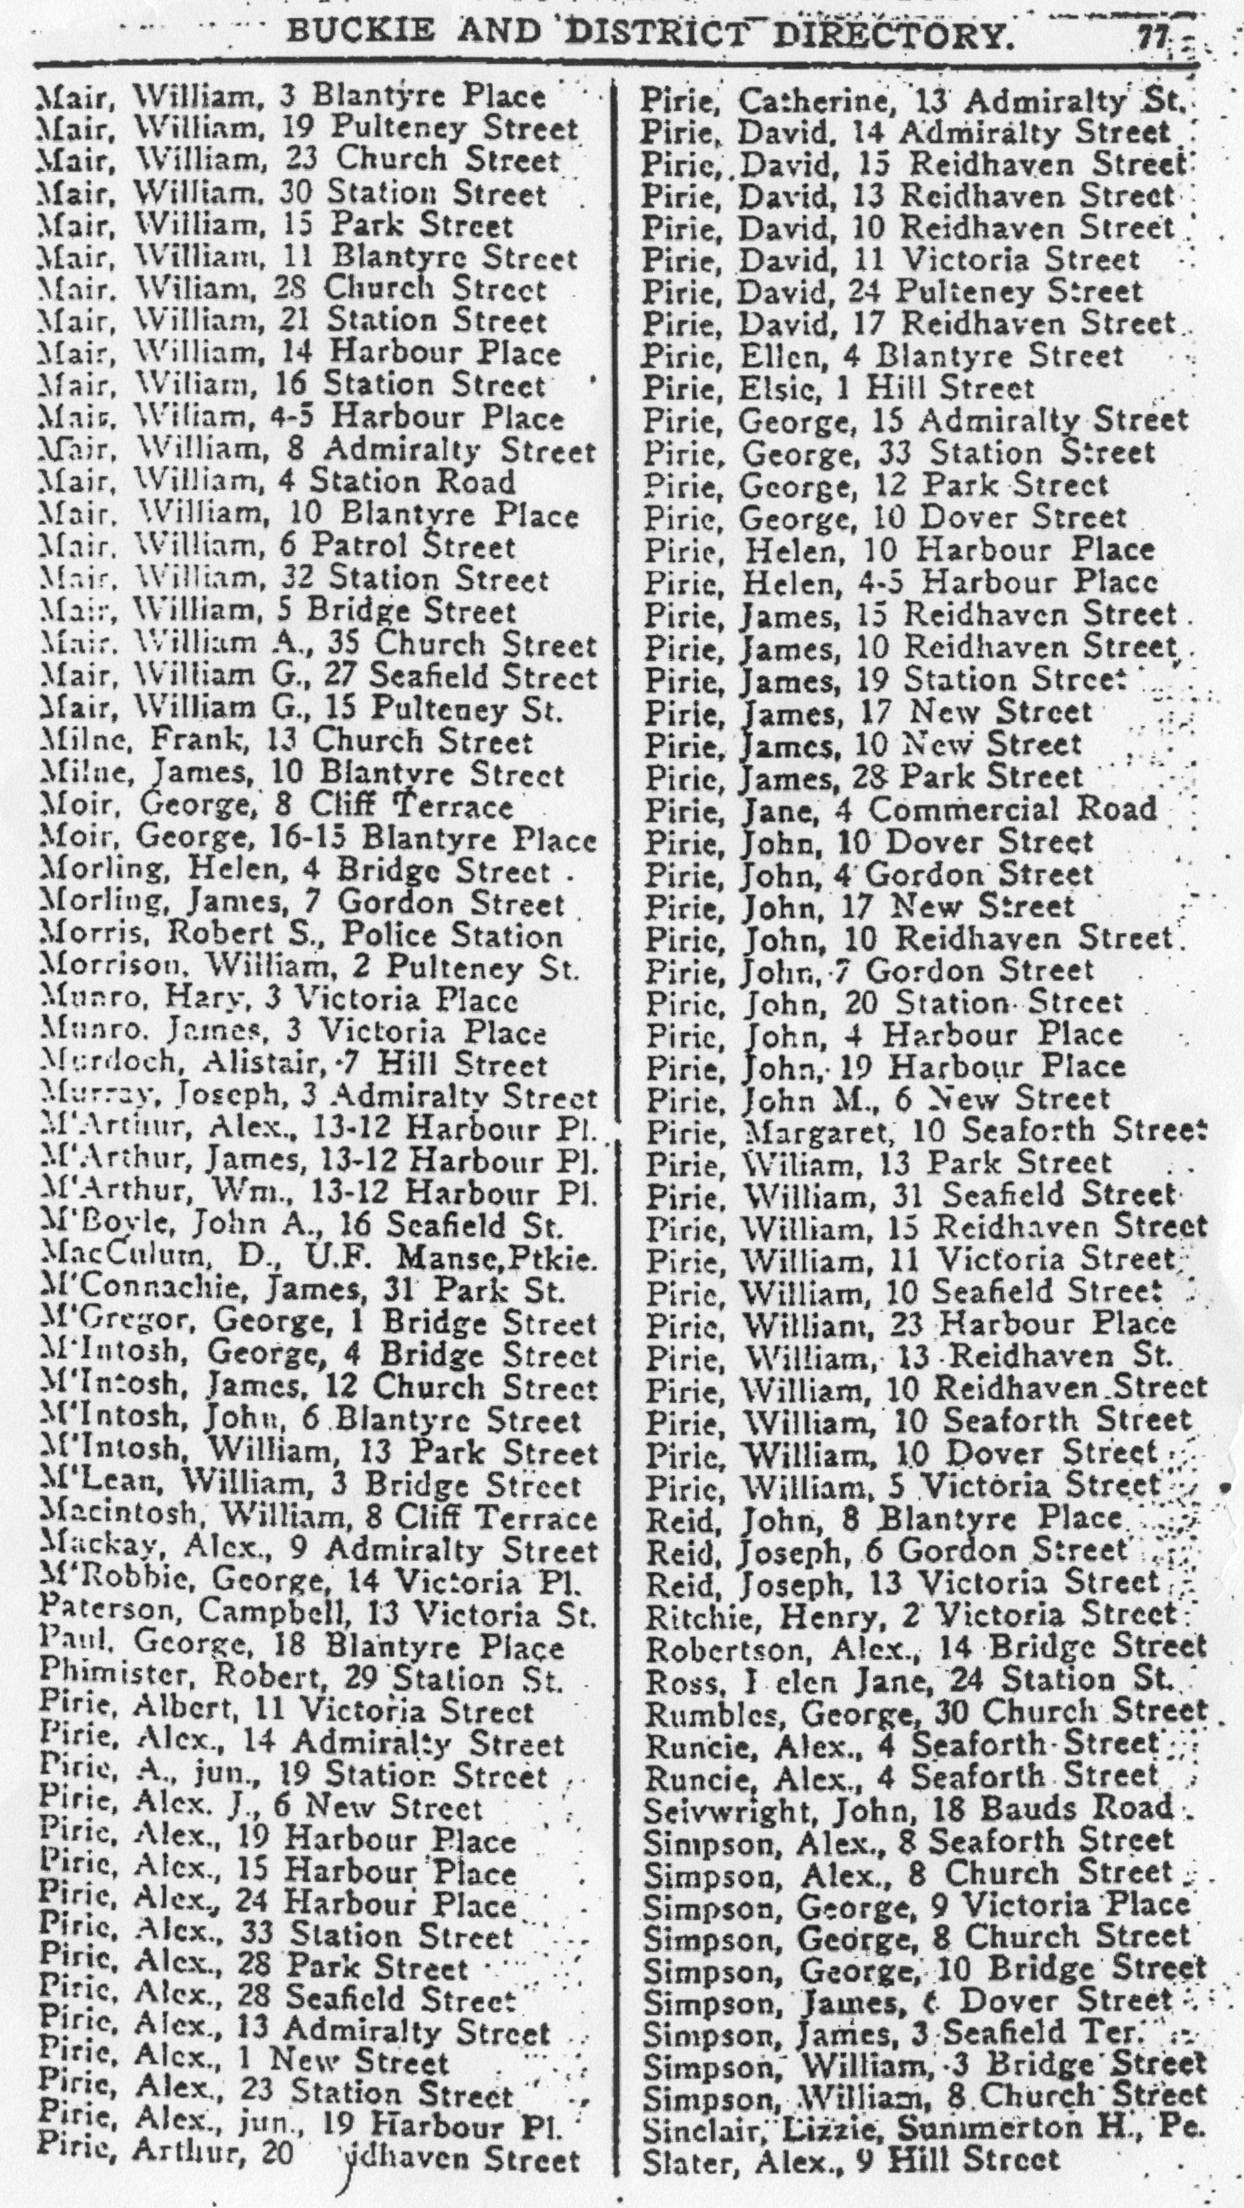 Buckie and District Directory 1926, page 77, Portknockie A-Z